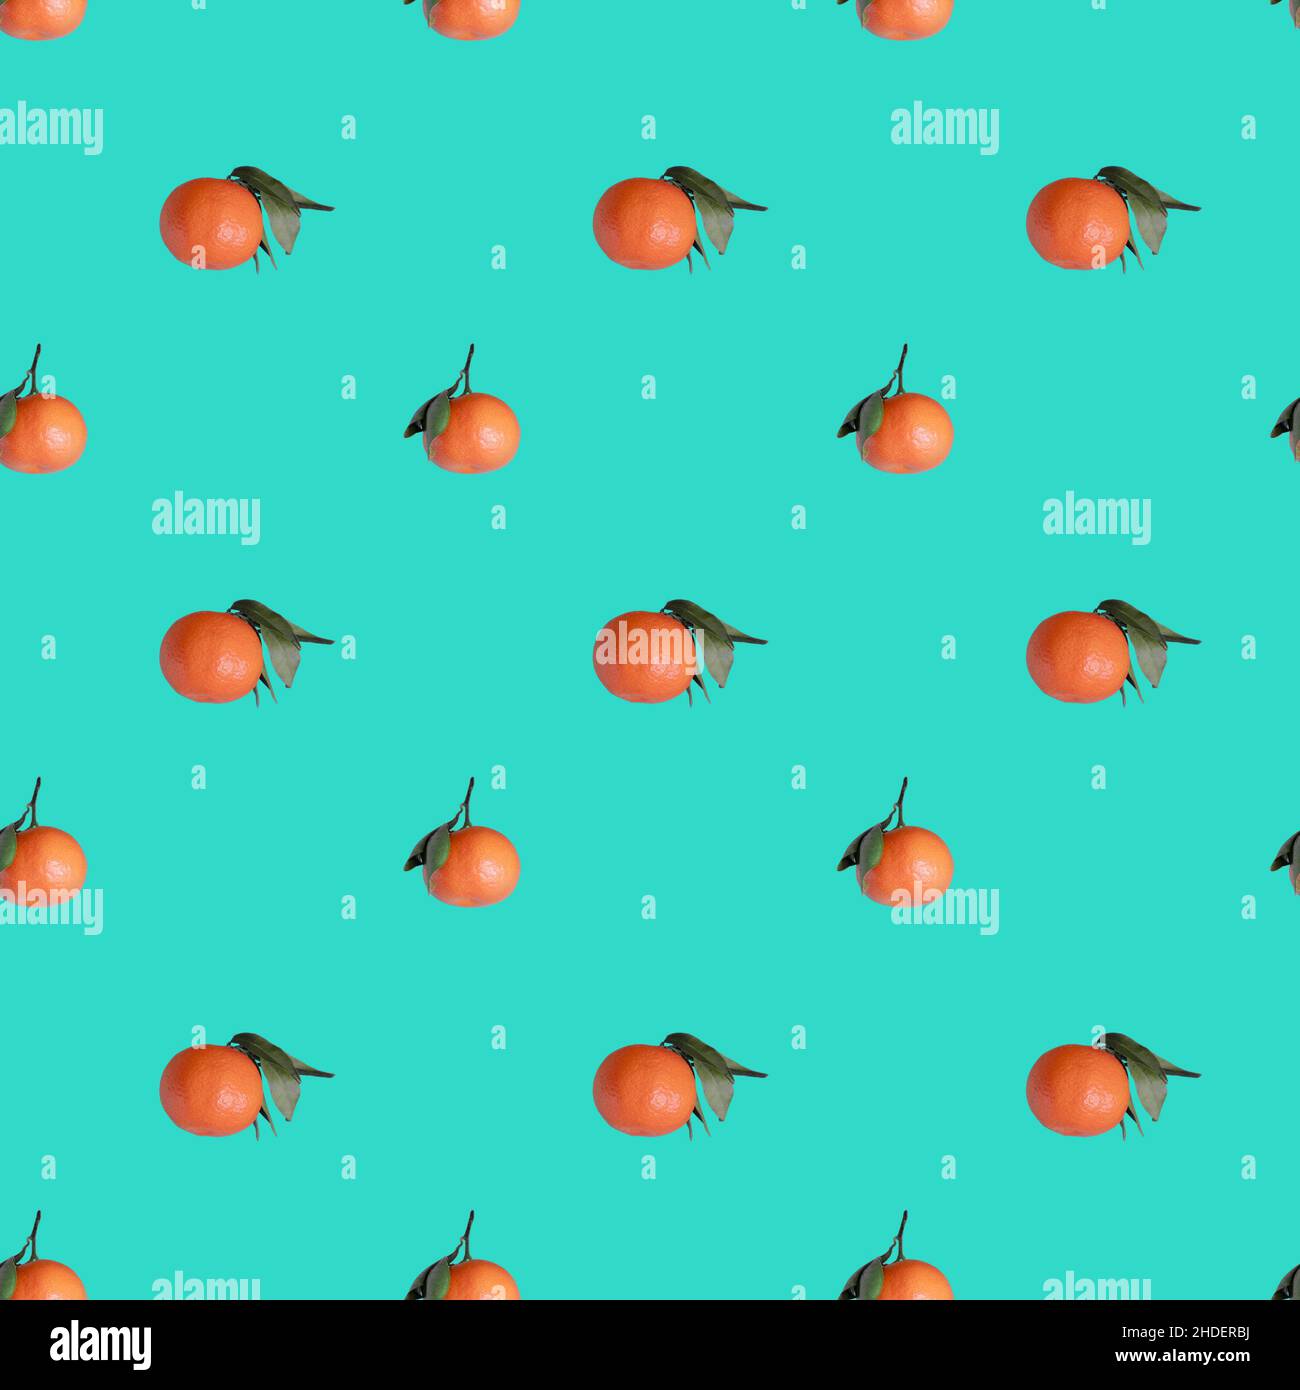 Seamless pattern with ripe orange tangerines on turquoise background Stock Photo